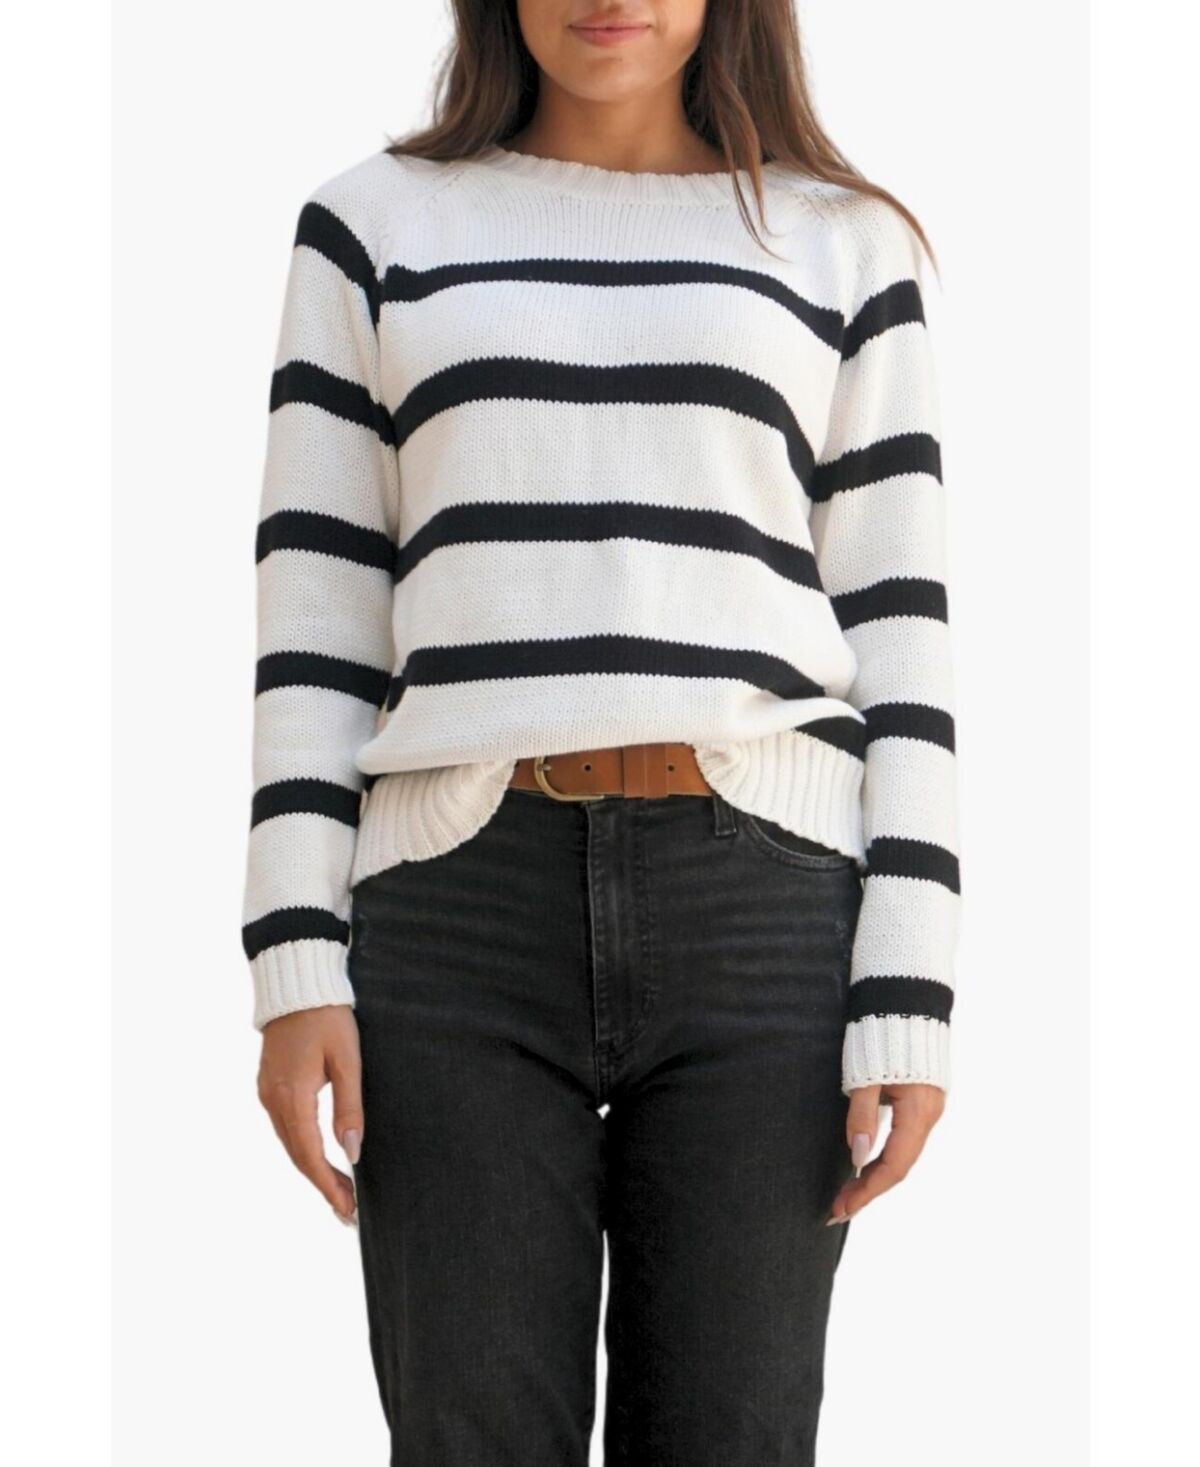 Paneros Clothing Women's Cotton Sloane Crewneck Pullover Sweater - Off white/ black stripe